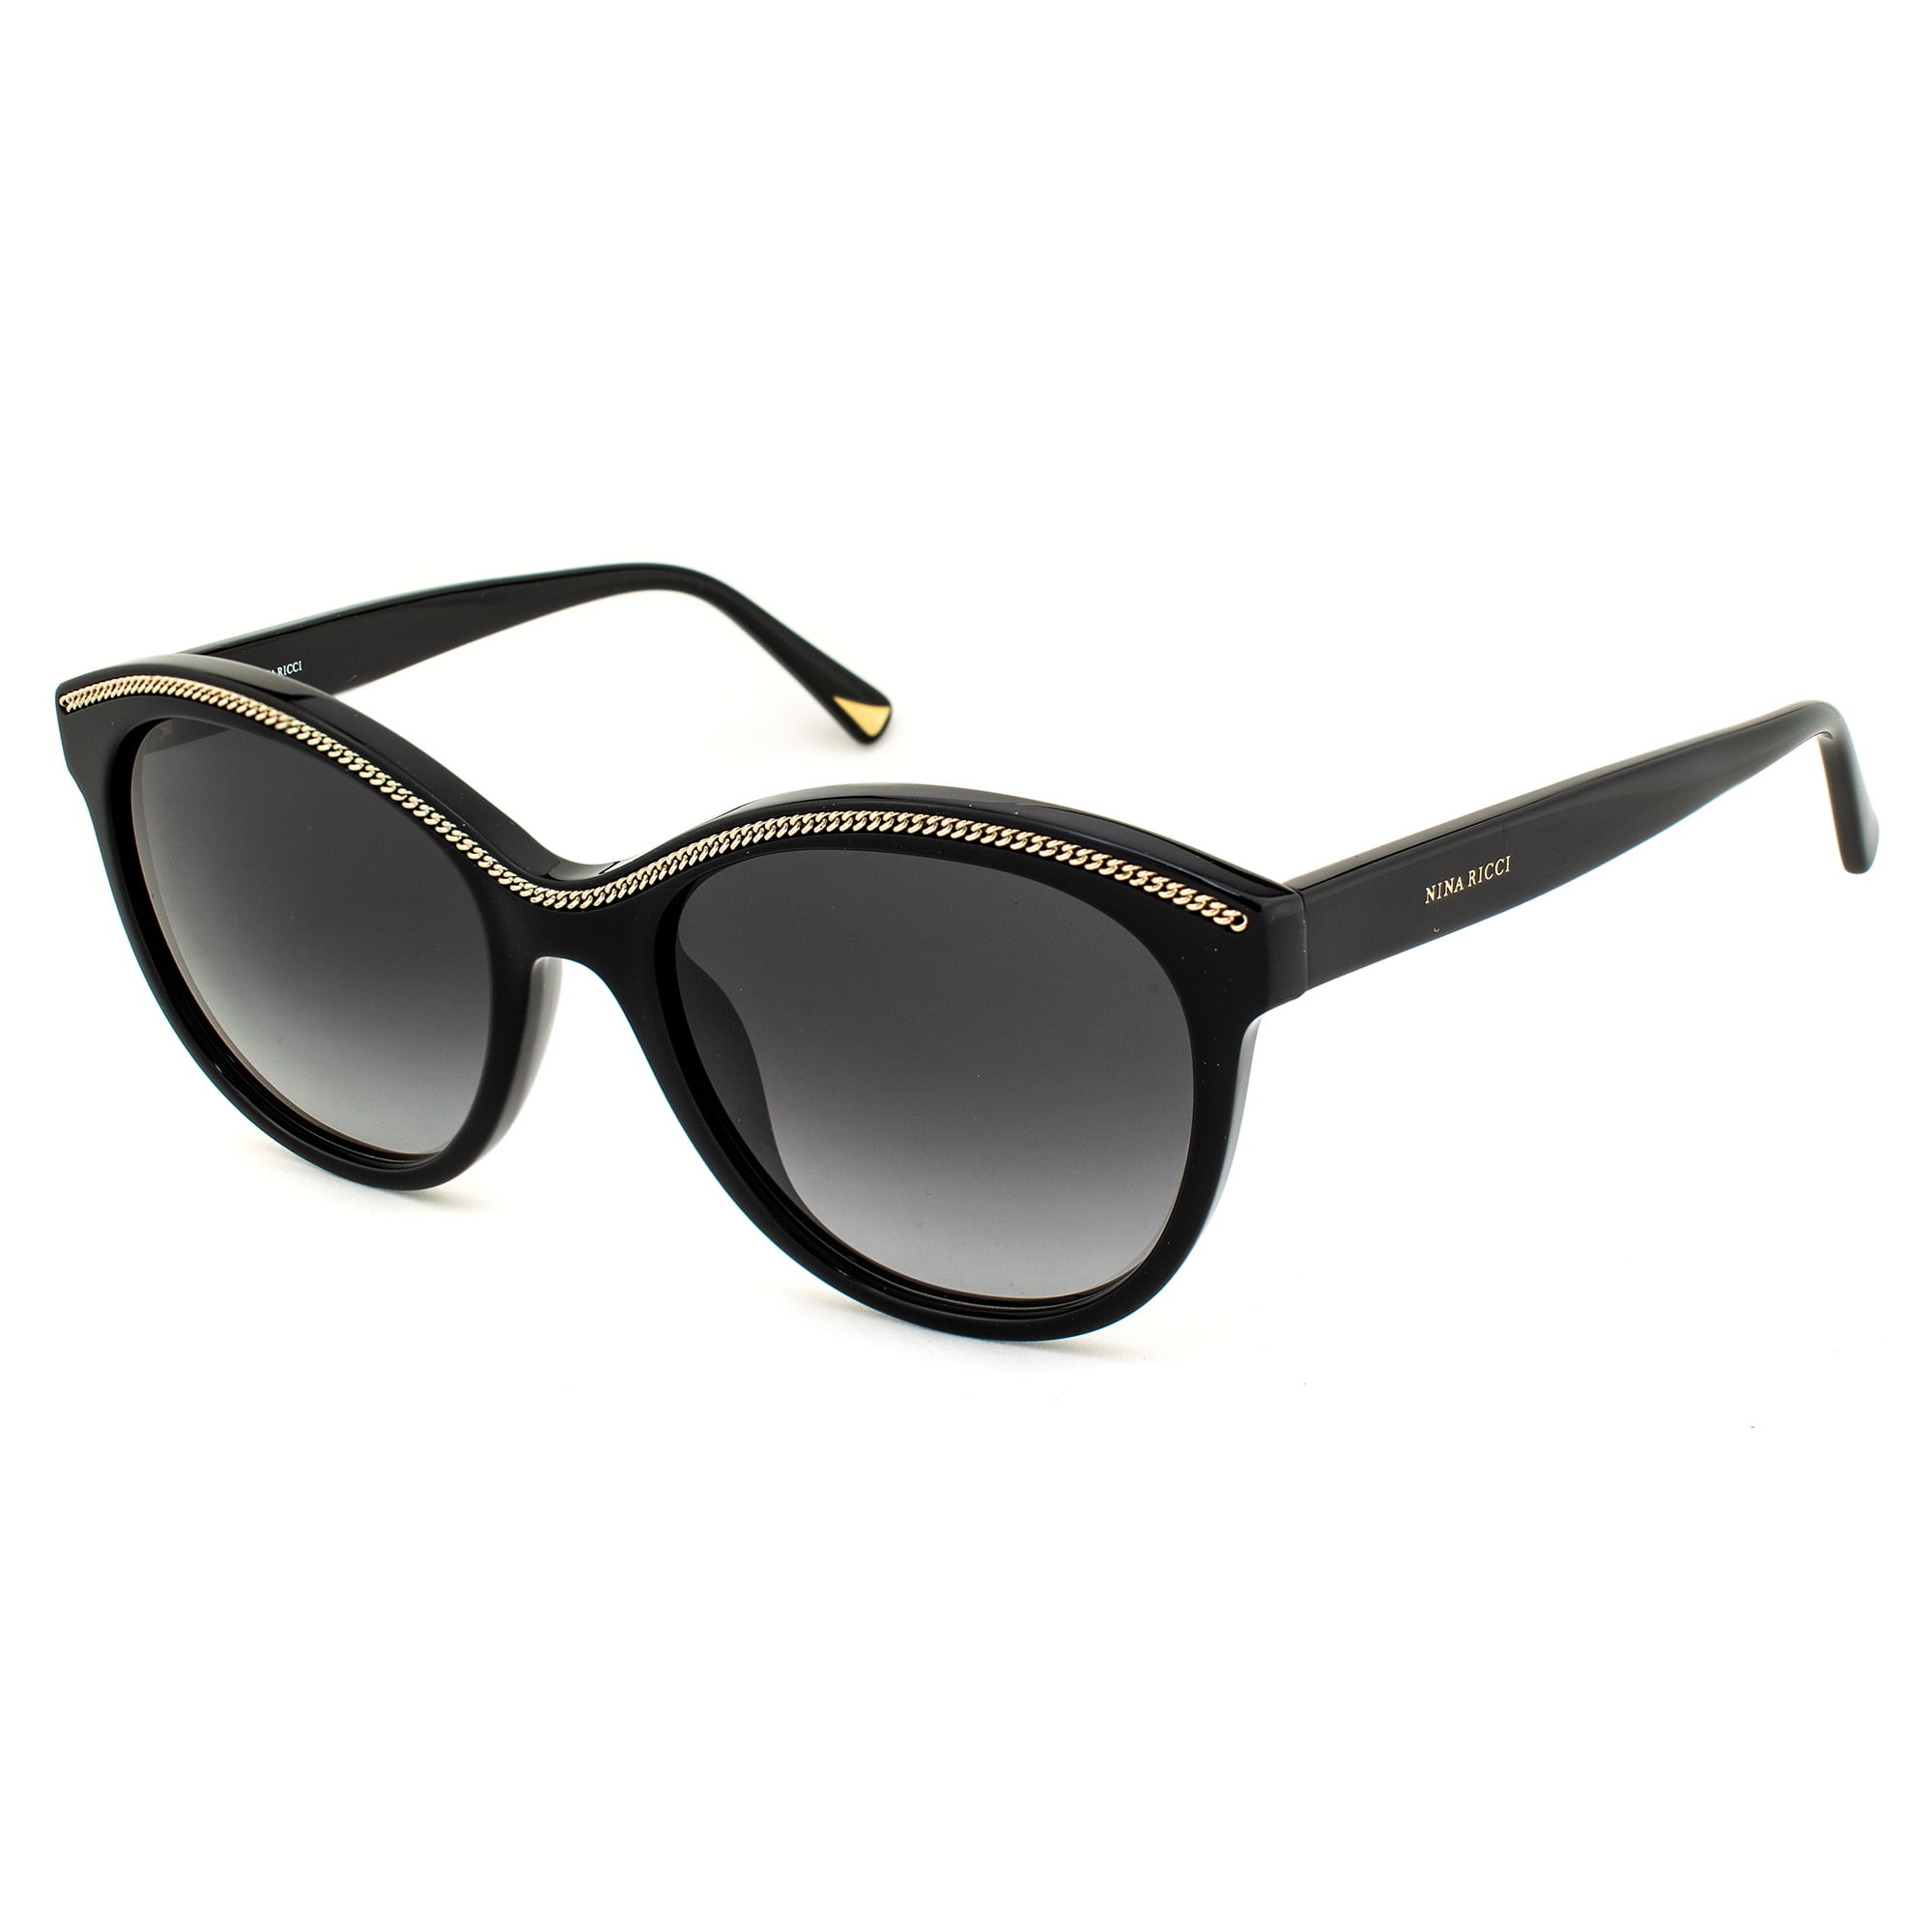 Sunglasses Nina Ricci SNR 113 Black 0700